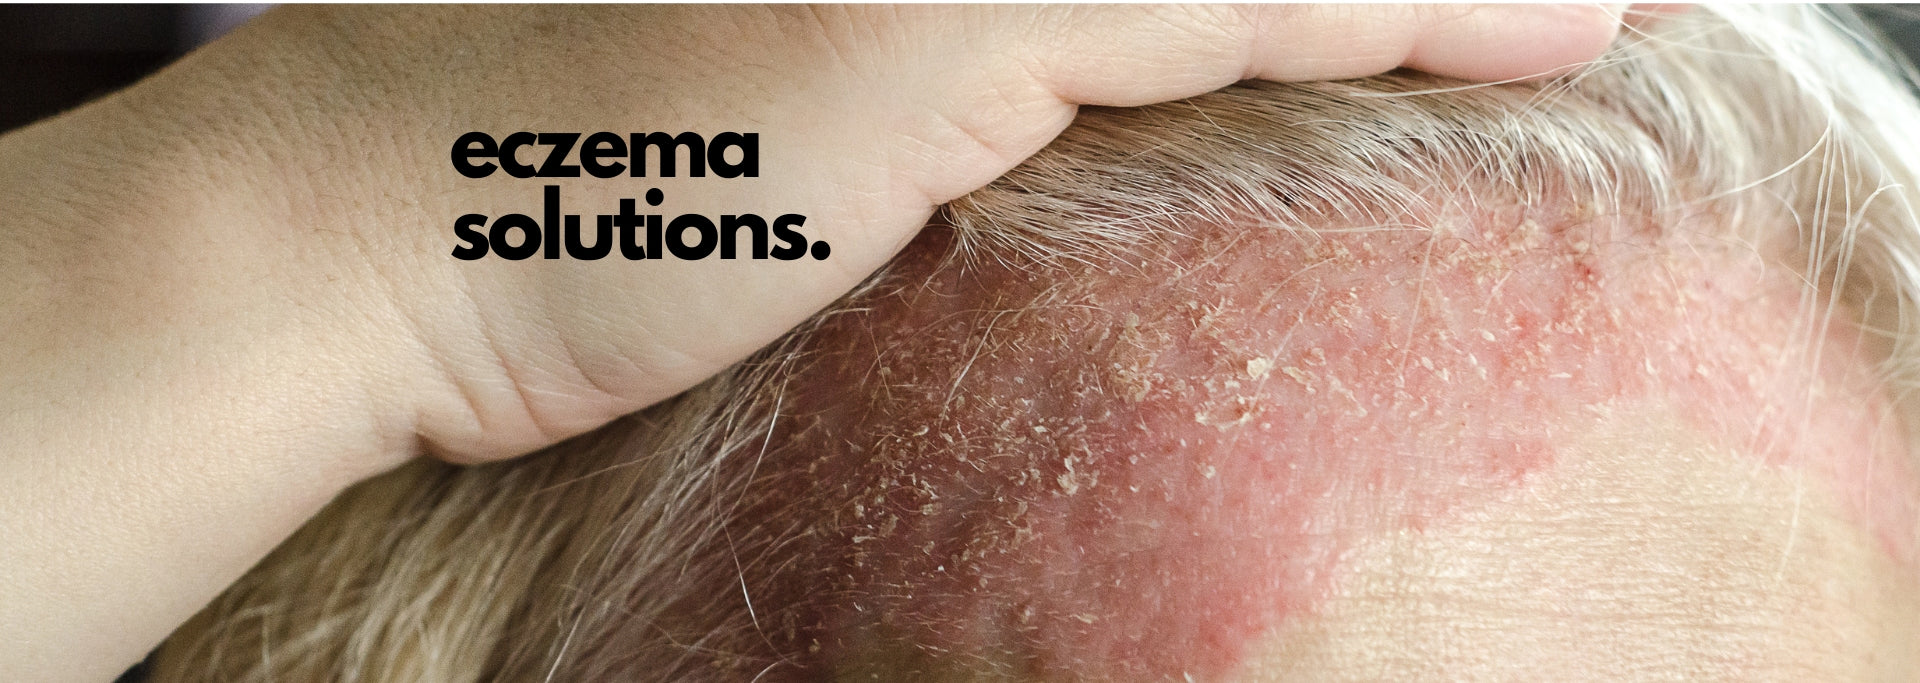 Treating Eczema Naturally: The Power of Holistic Healing